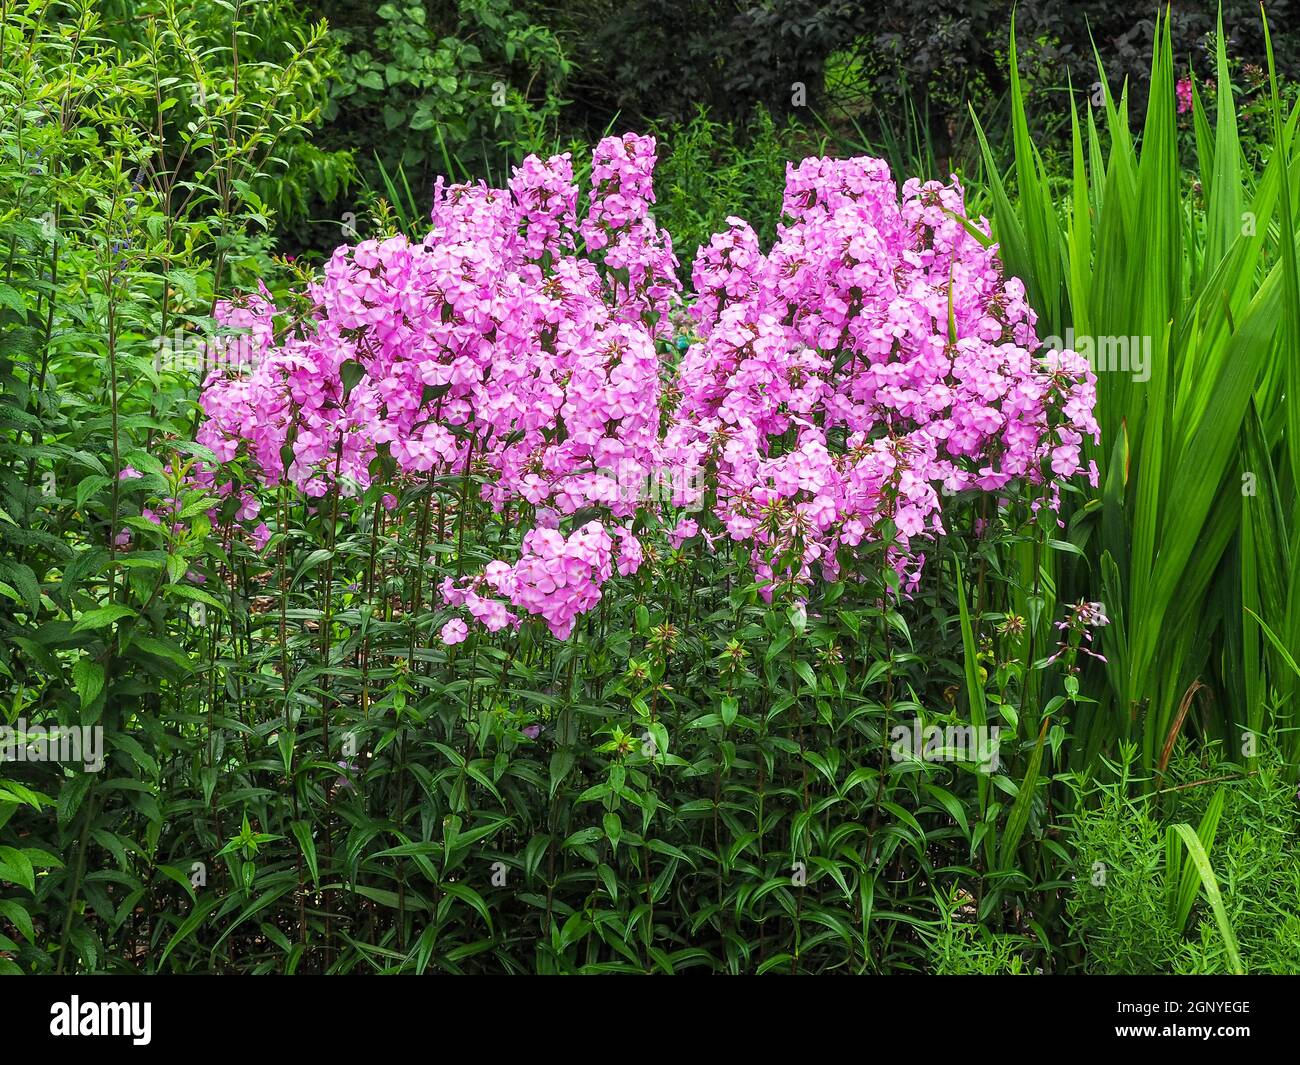 A clump of bright pink Phlox paniculata flowering amongst green vegetation in a garden Stock Photo